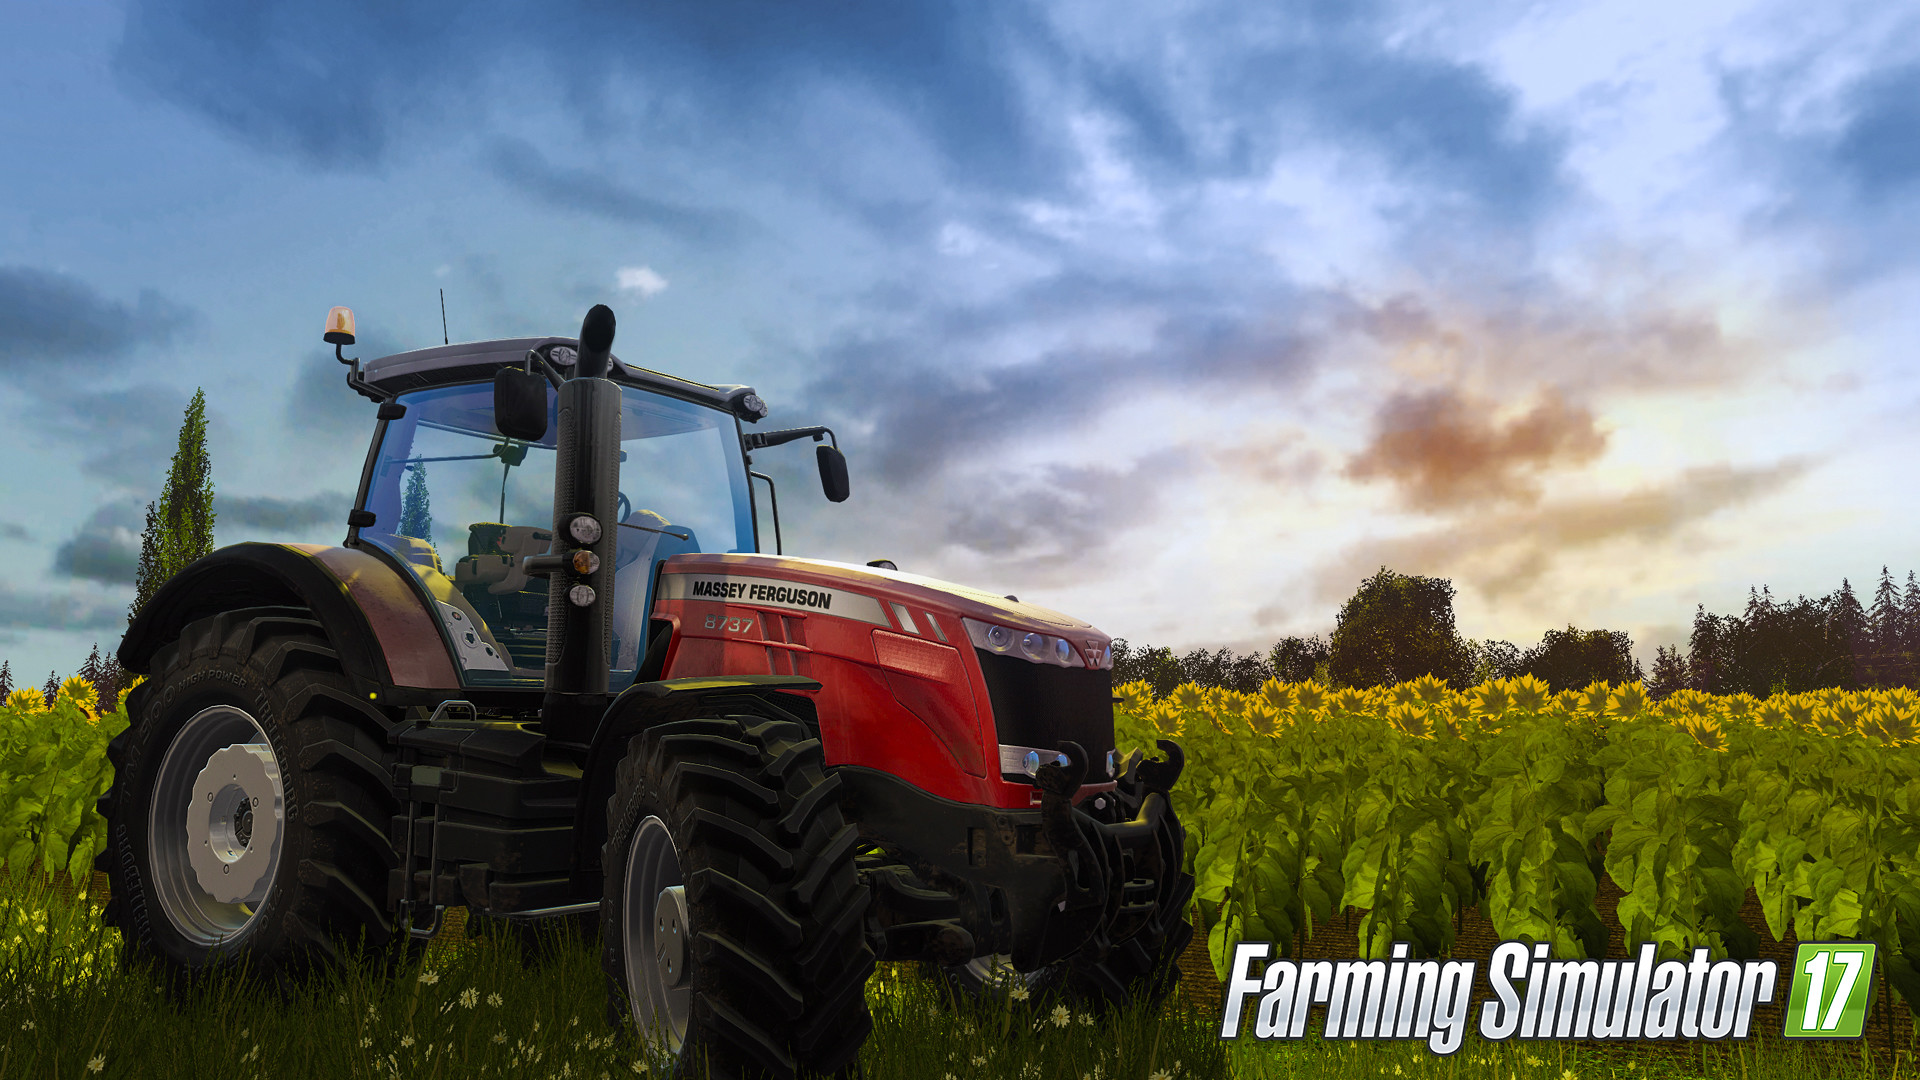 http://gameplatform.pl/wp-content/uploads/2016/07/Farming-Simulator-17-wymagania.jpg